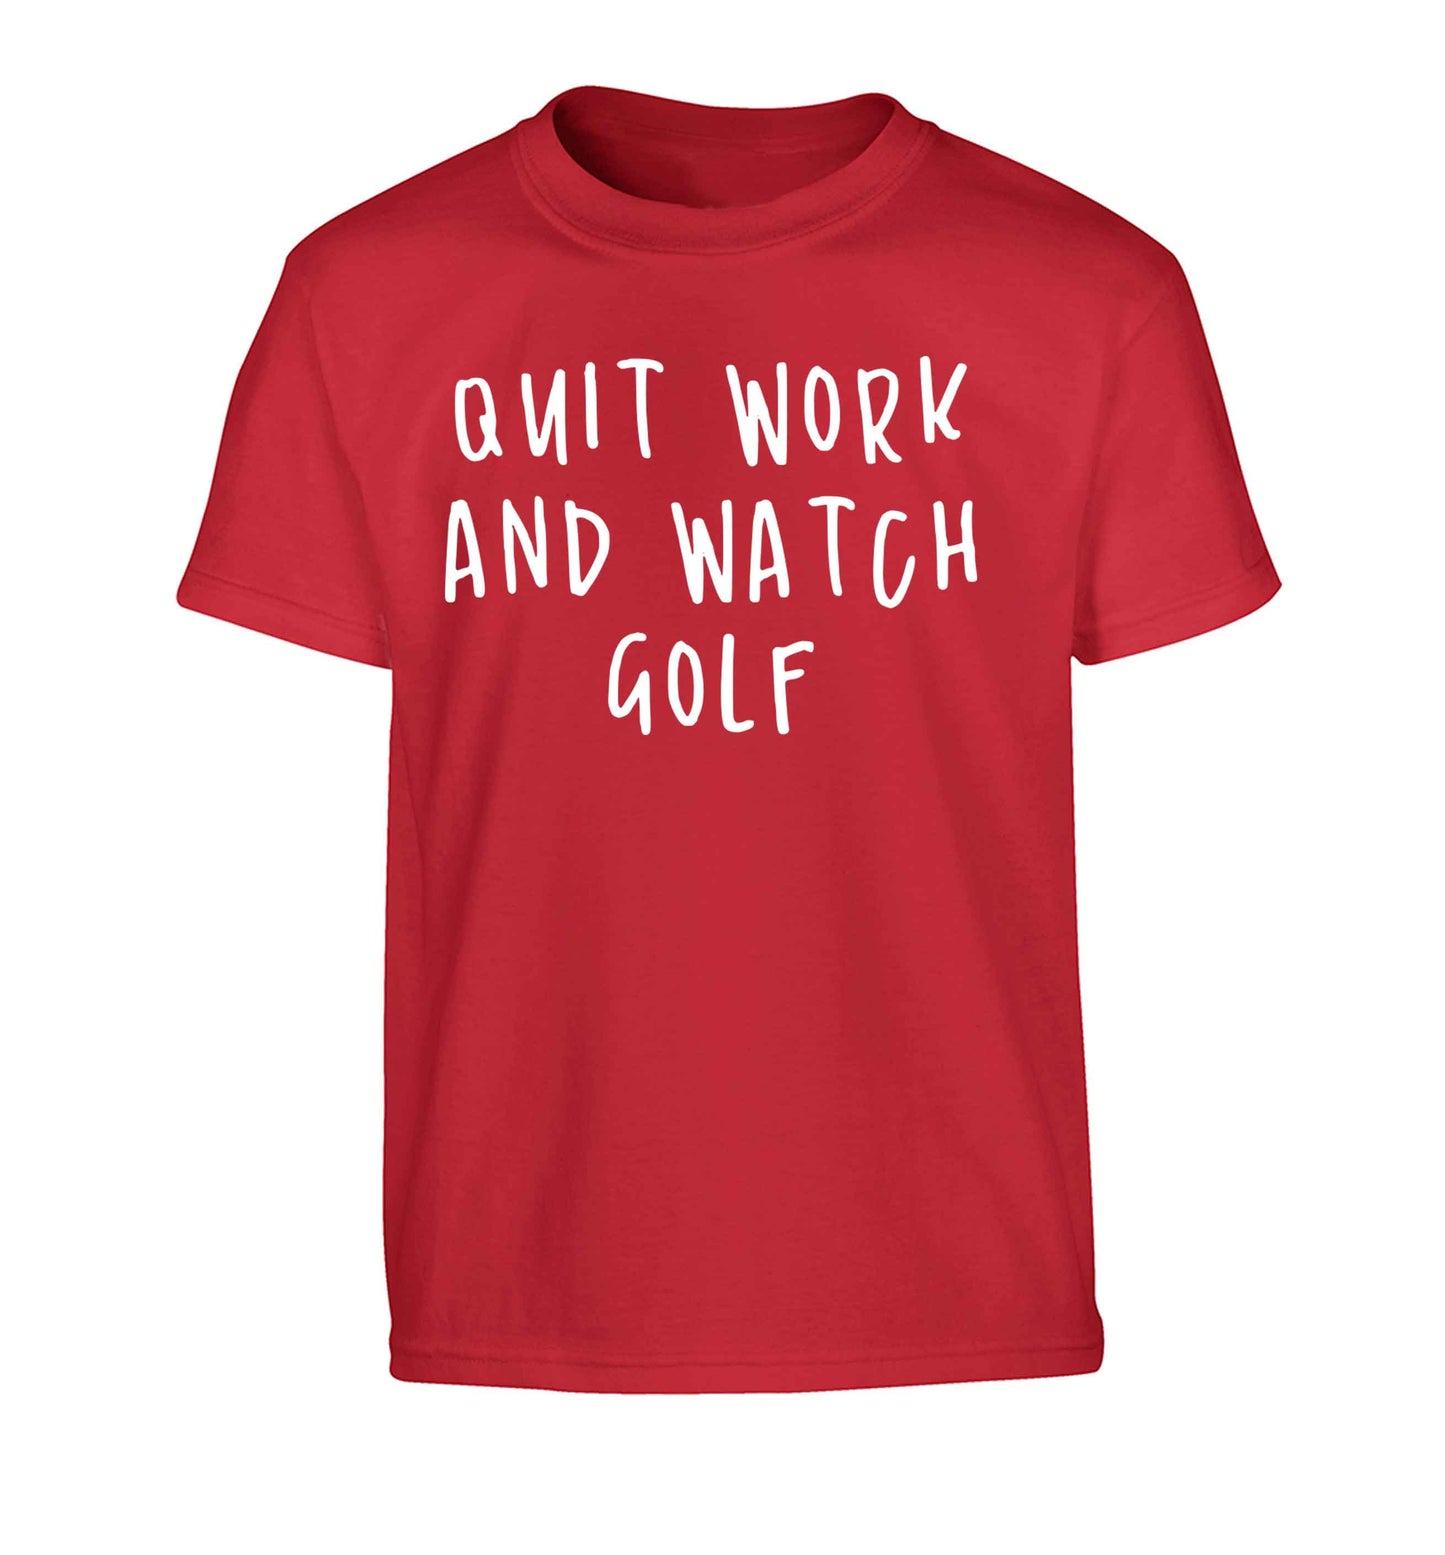 Quit work and watch golf Children's red Tshirt 12-13 Years